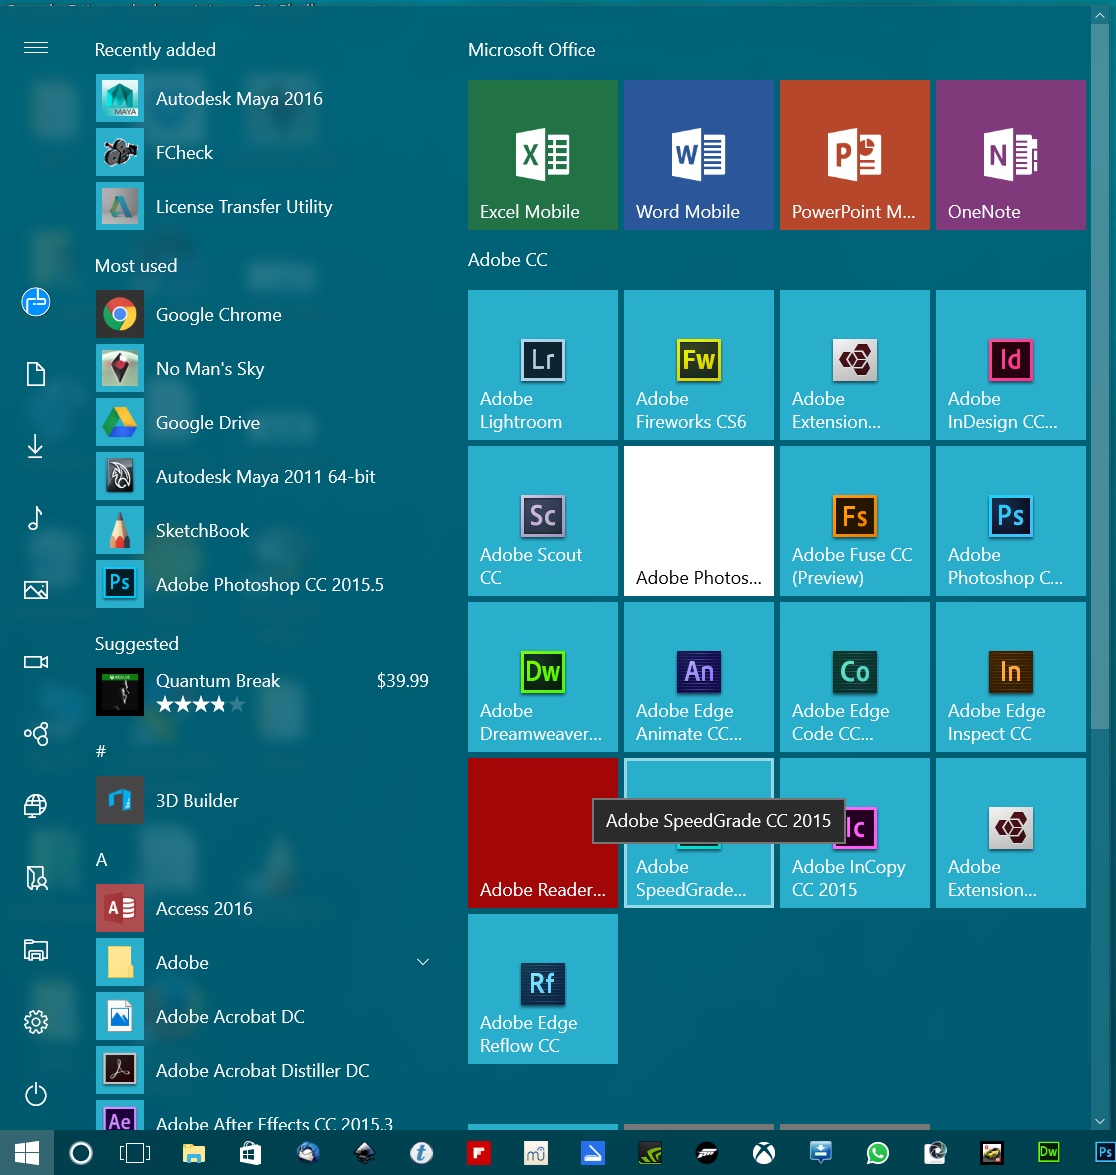 Customize Windows 10 start menu - turn off fullscreen view